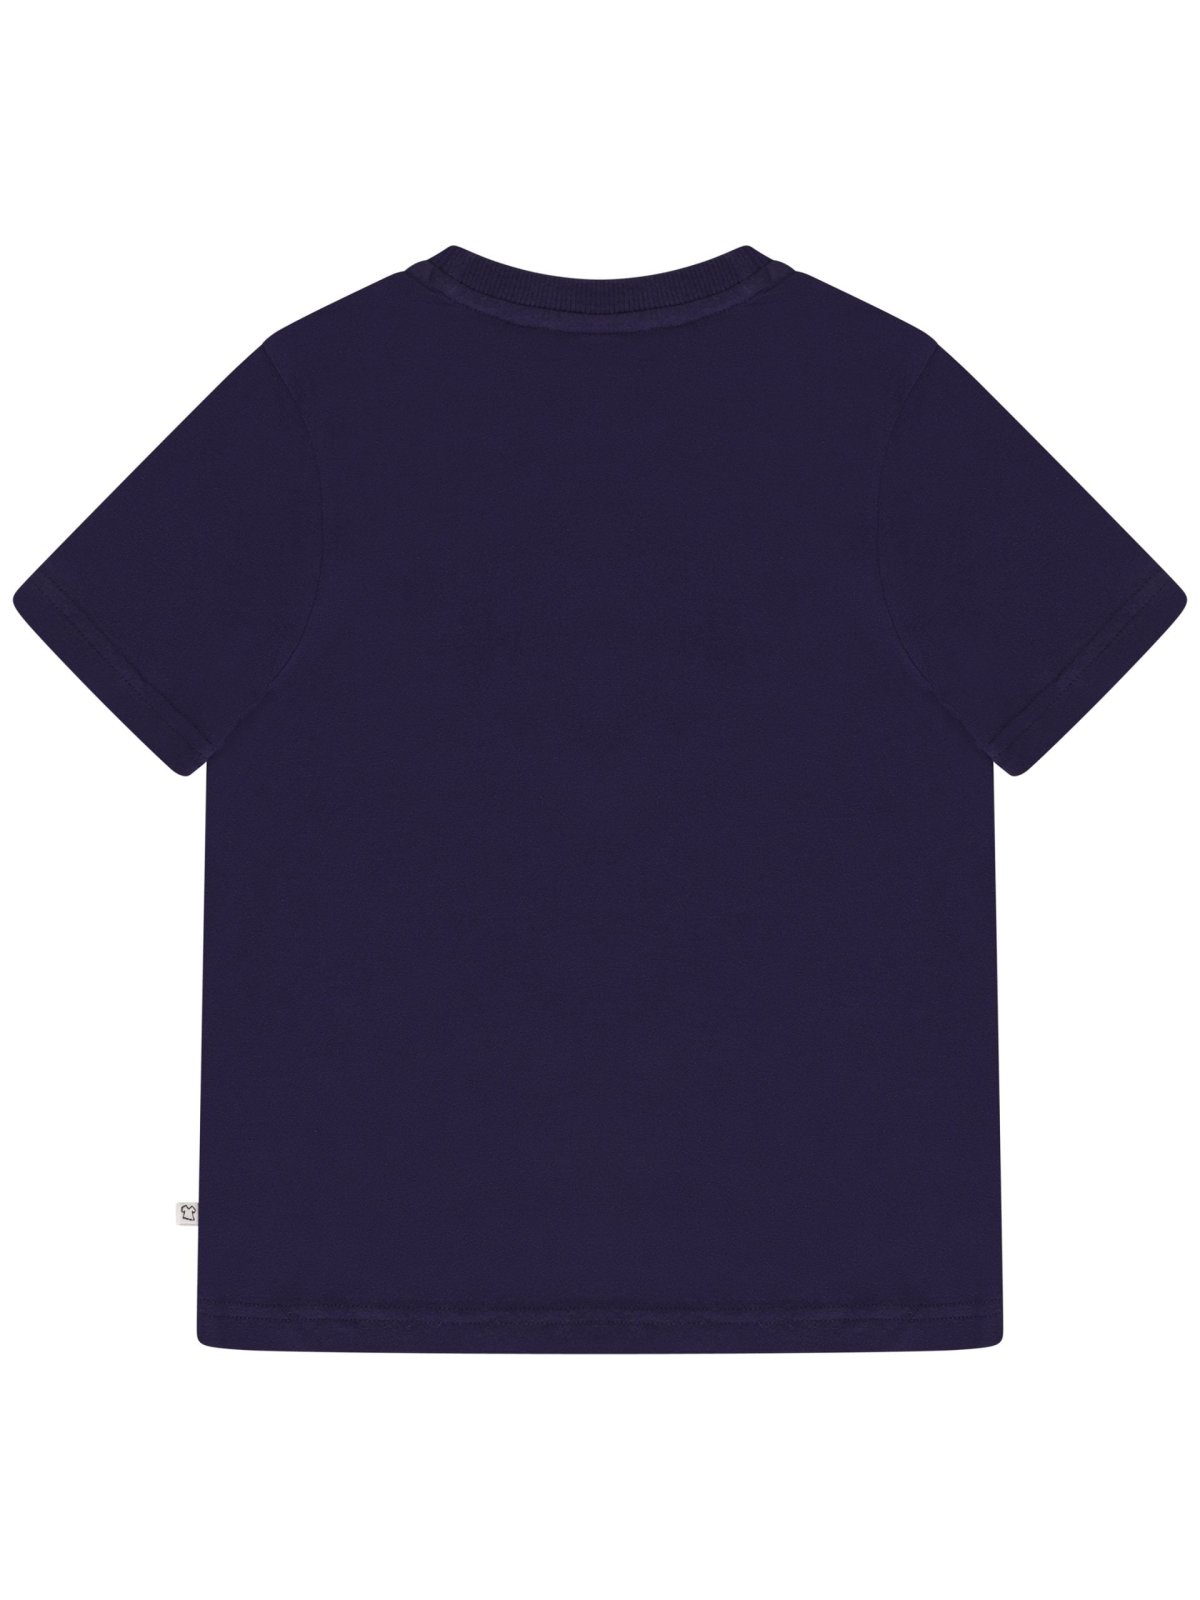 Sonic Prime Boys Navy T-Shirt With Sonic Prime Print Daywear - Brand Threads